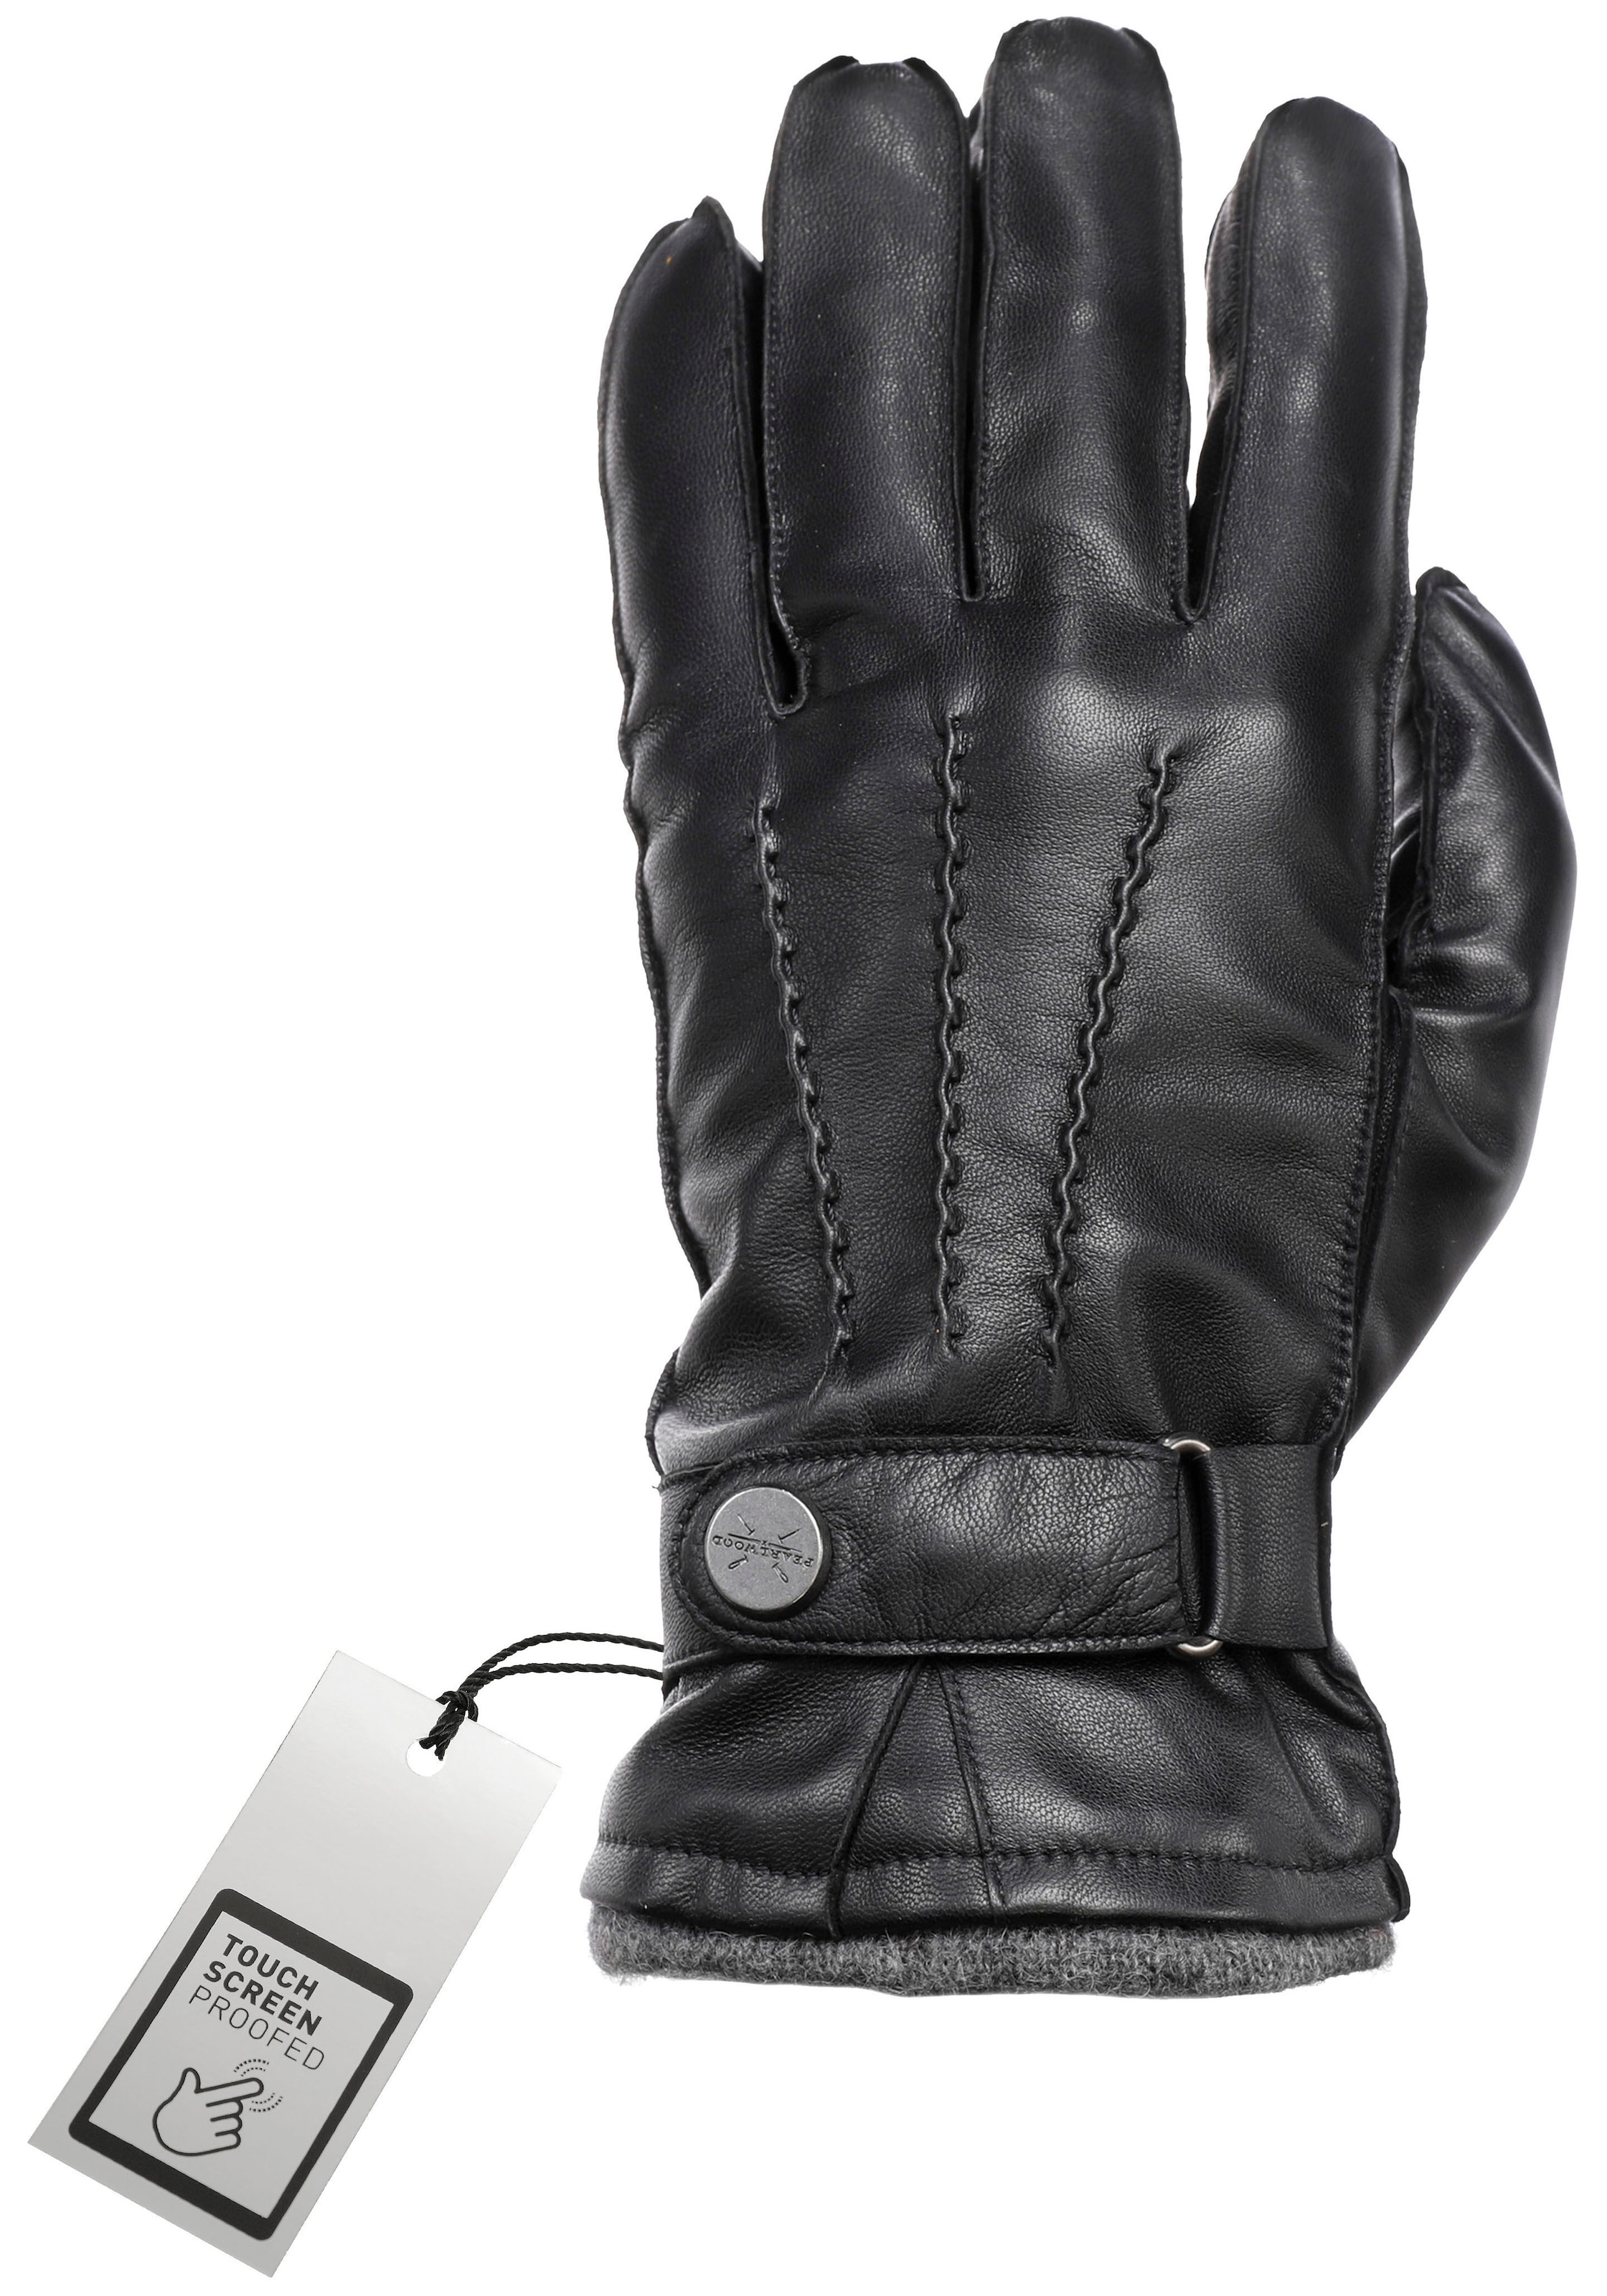 PEARLWOOD | BAUR System kaufen »Mike«, Touchscreen 10 proofed - Finger Lederhandschuhe für